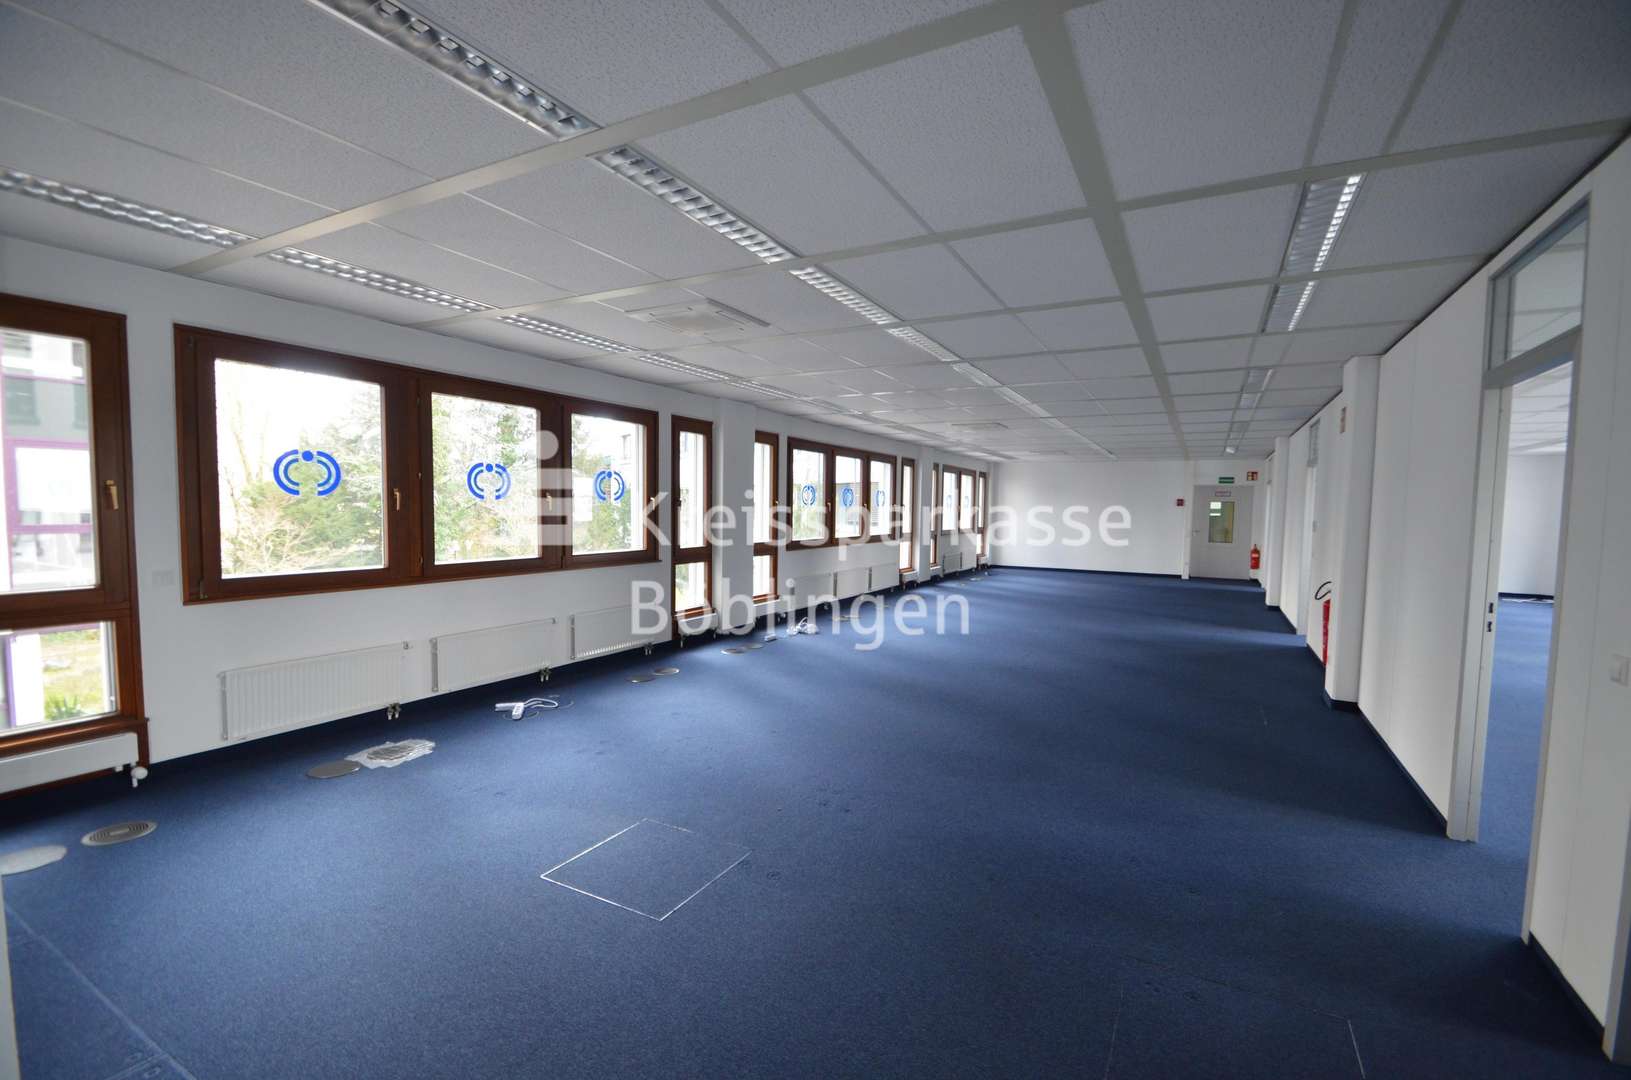 Großraumbüro 1 - Büro in 71034 Böblingen mit 211m² mieten